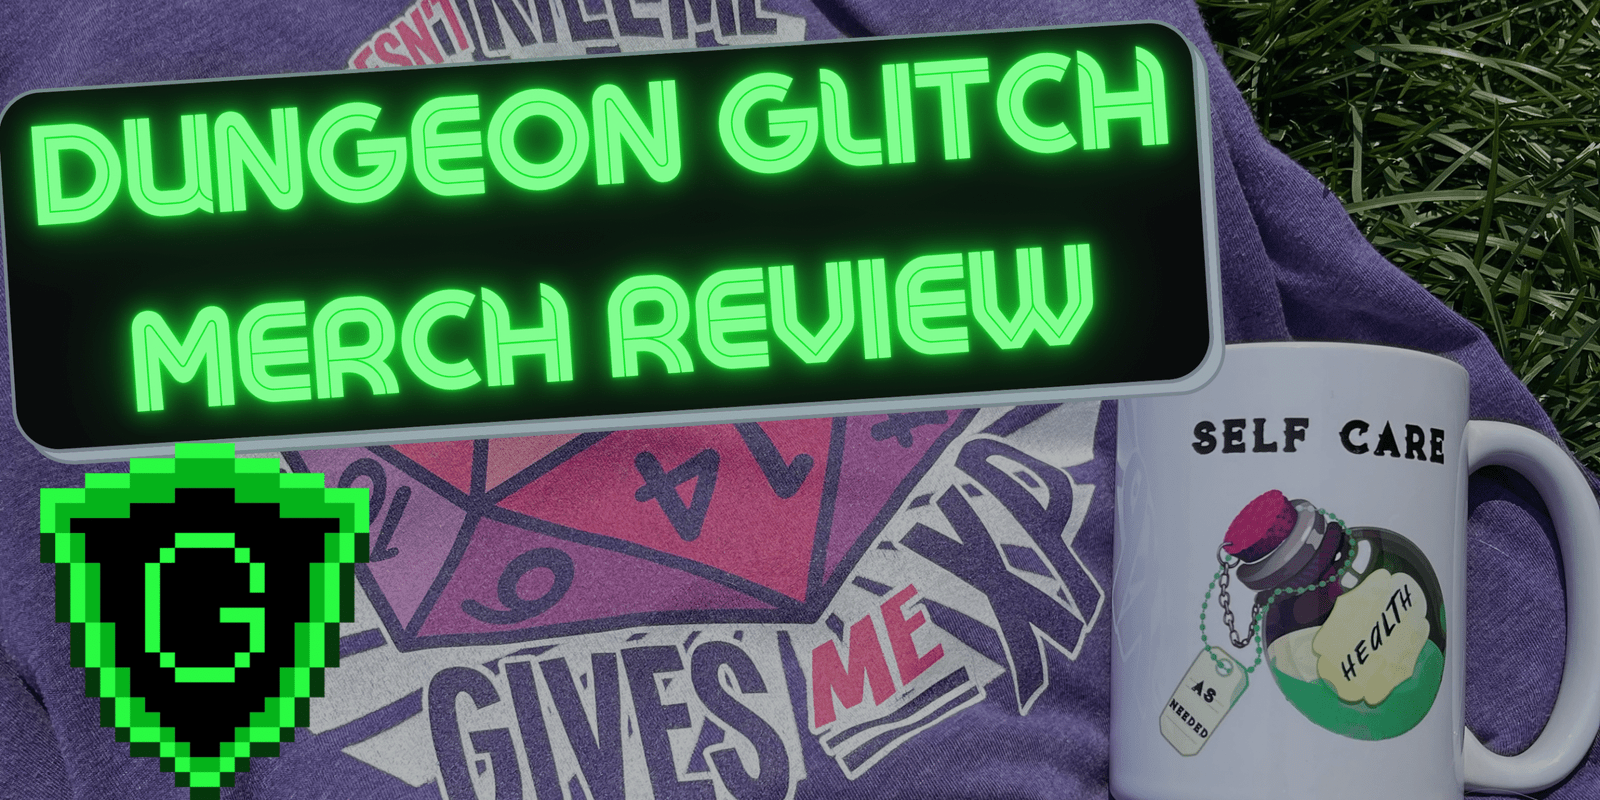 Header for dungeon glitch merch review